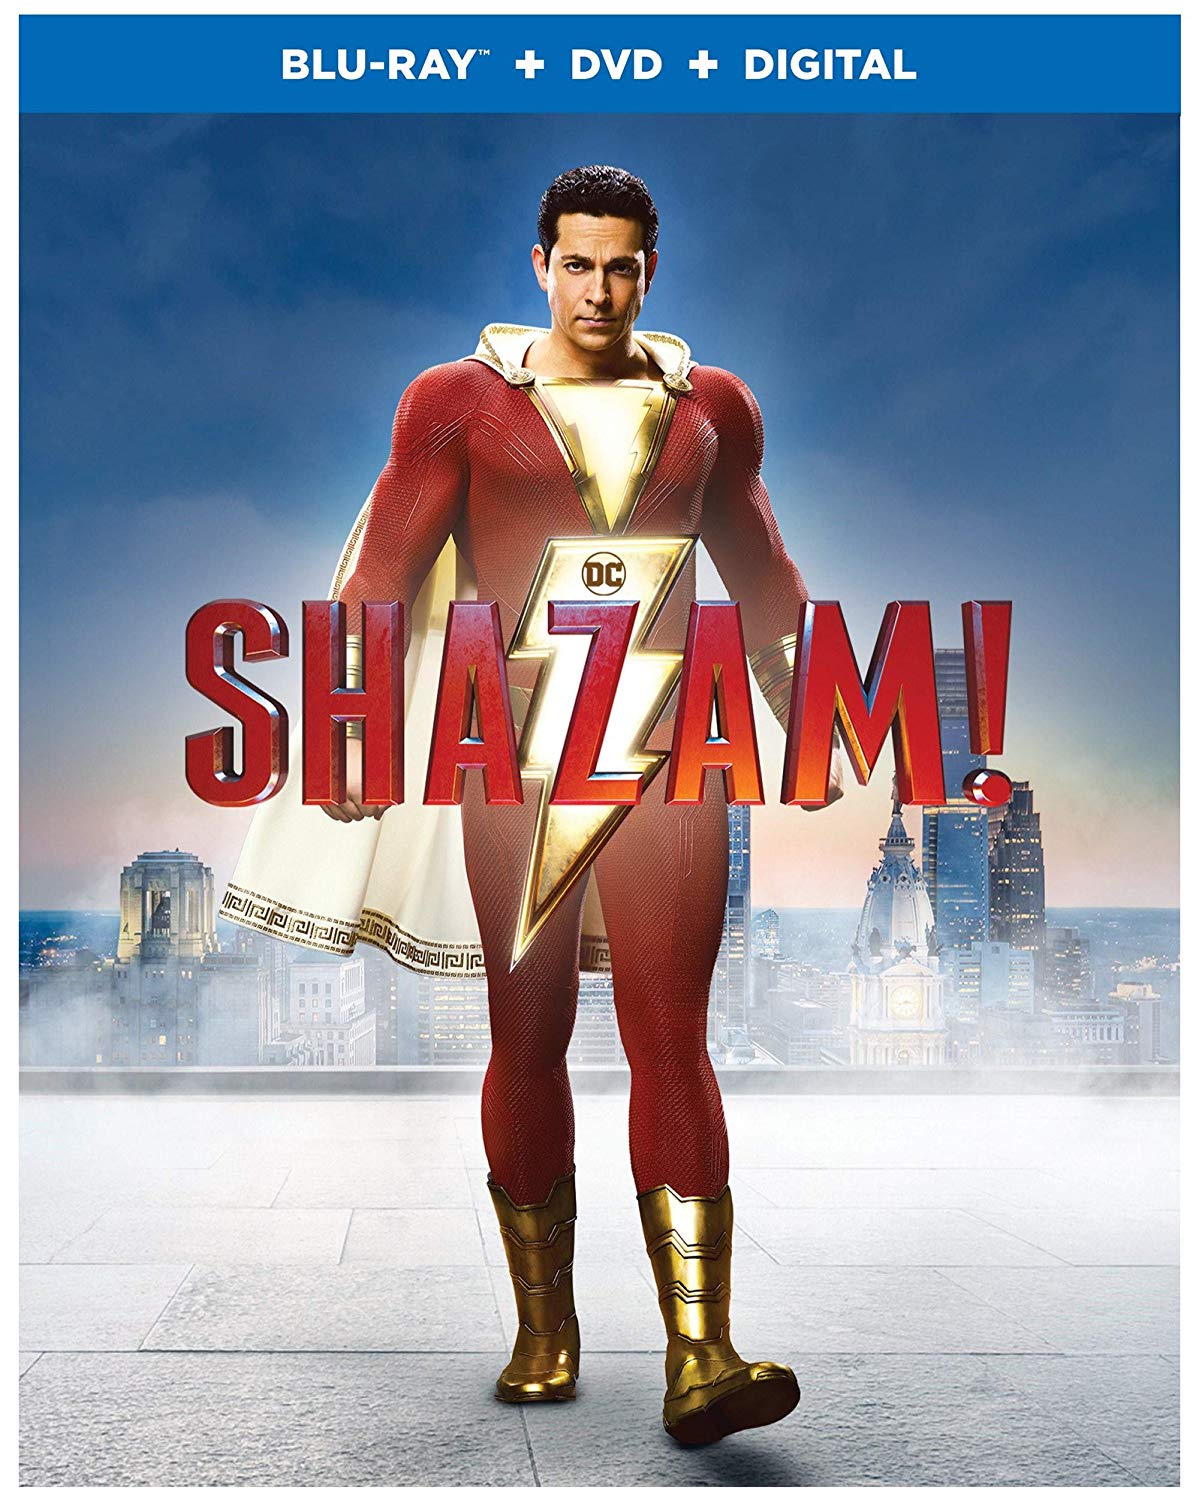 Shazam! on Blu-ray, DVD and Digital